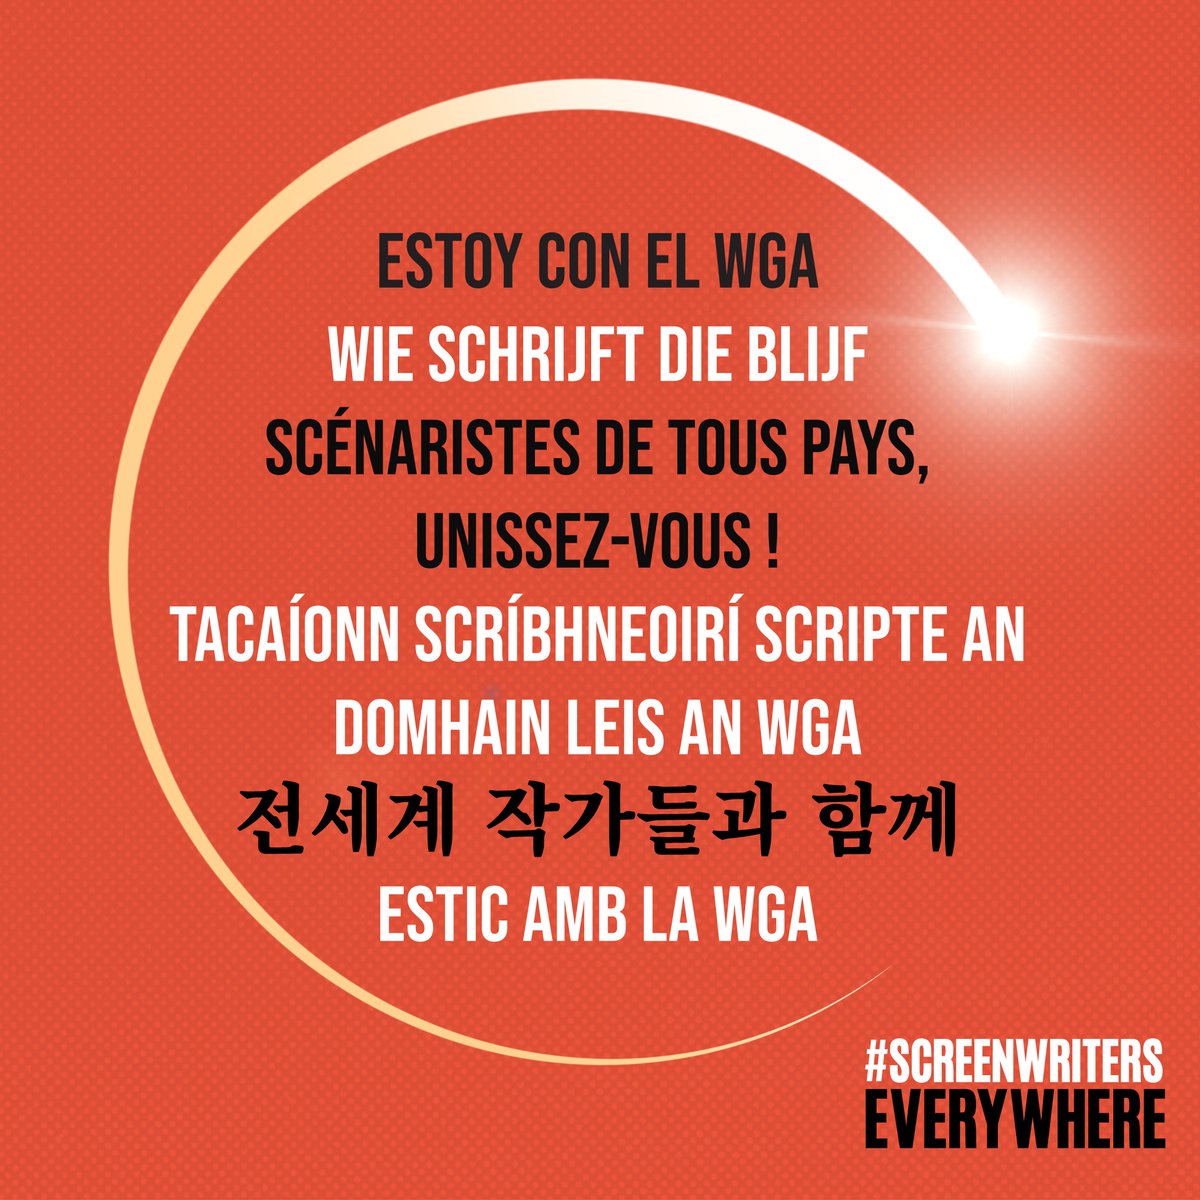 Screenwriters Everywhere!
International Day of Solidarity! 🪧✊🏻